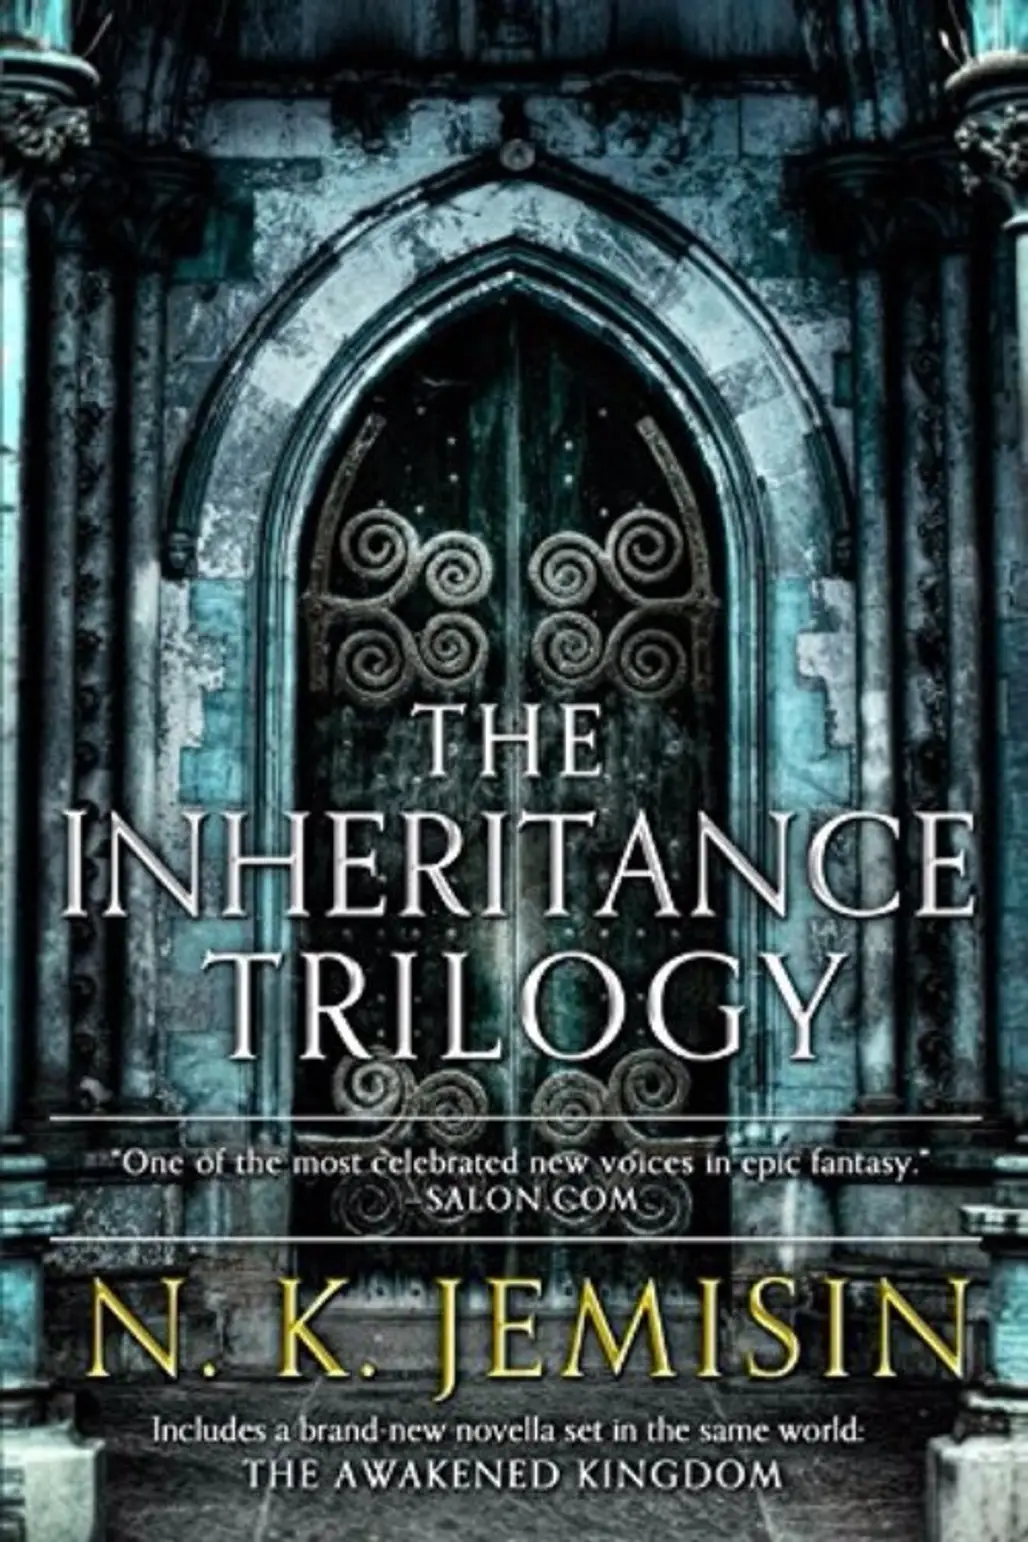 The Inheritance Trilogy by N. K. Jemisin